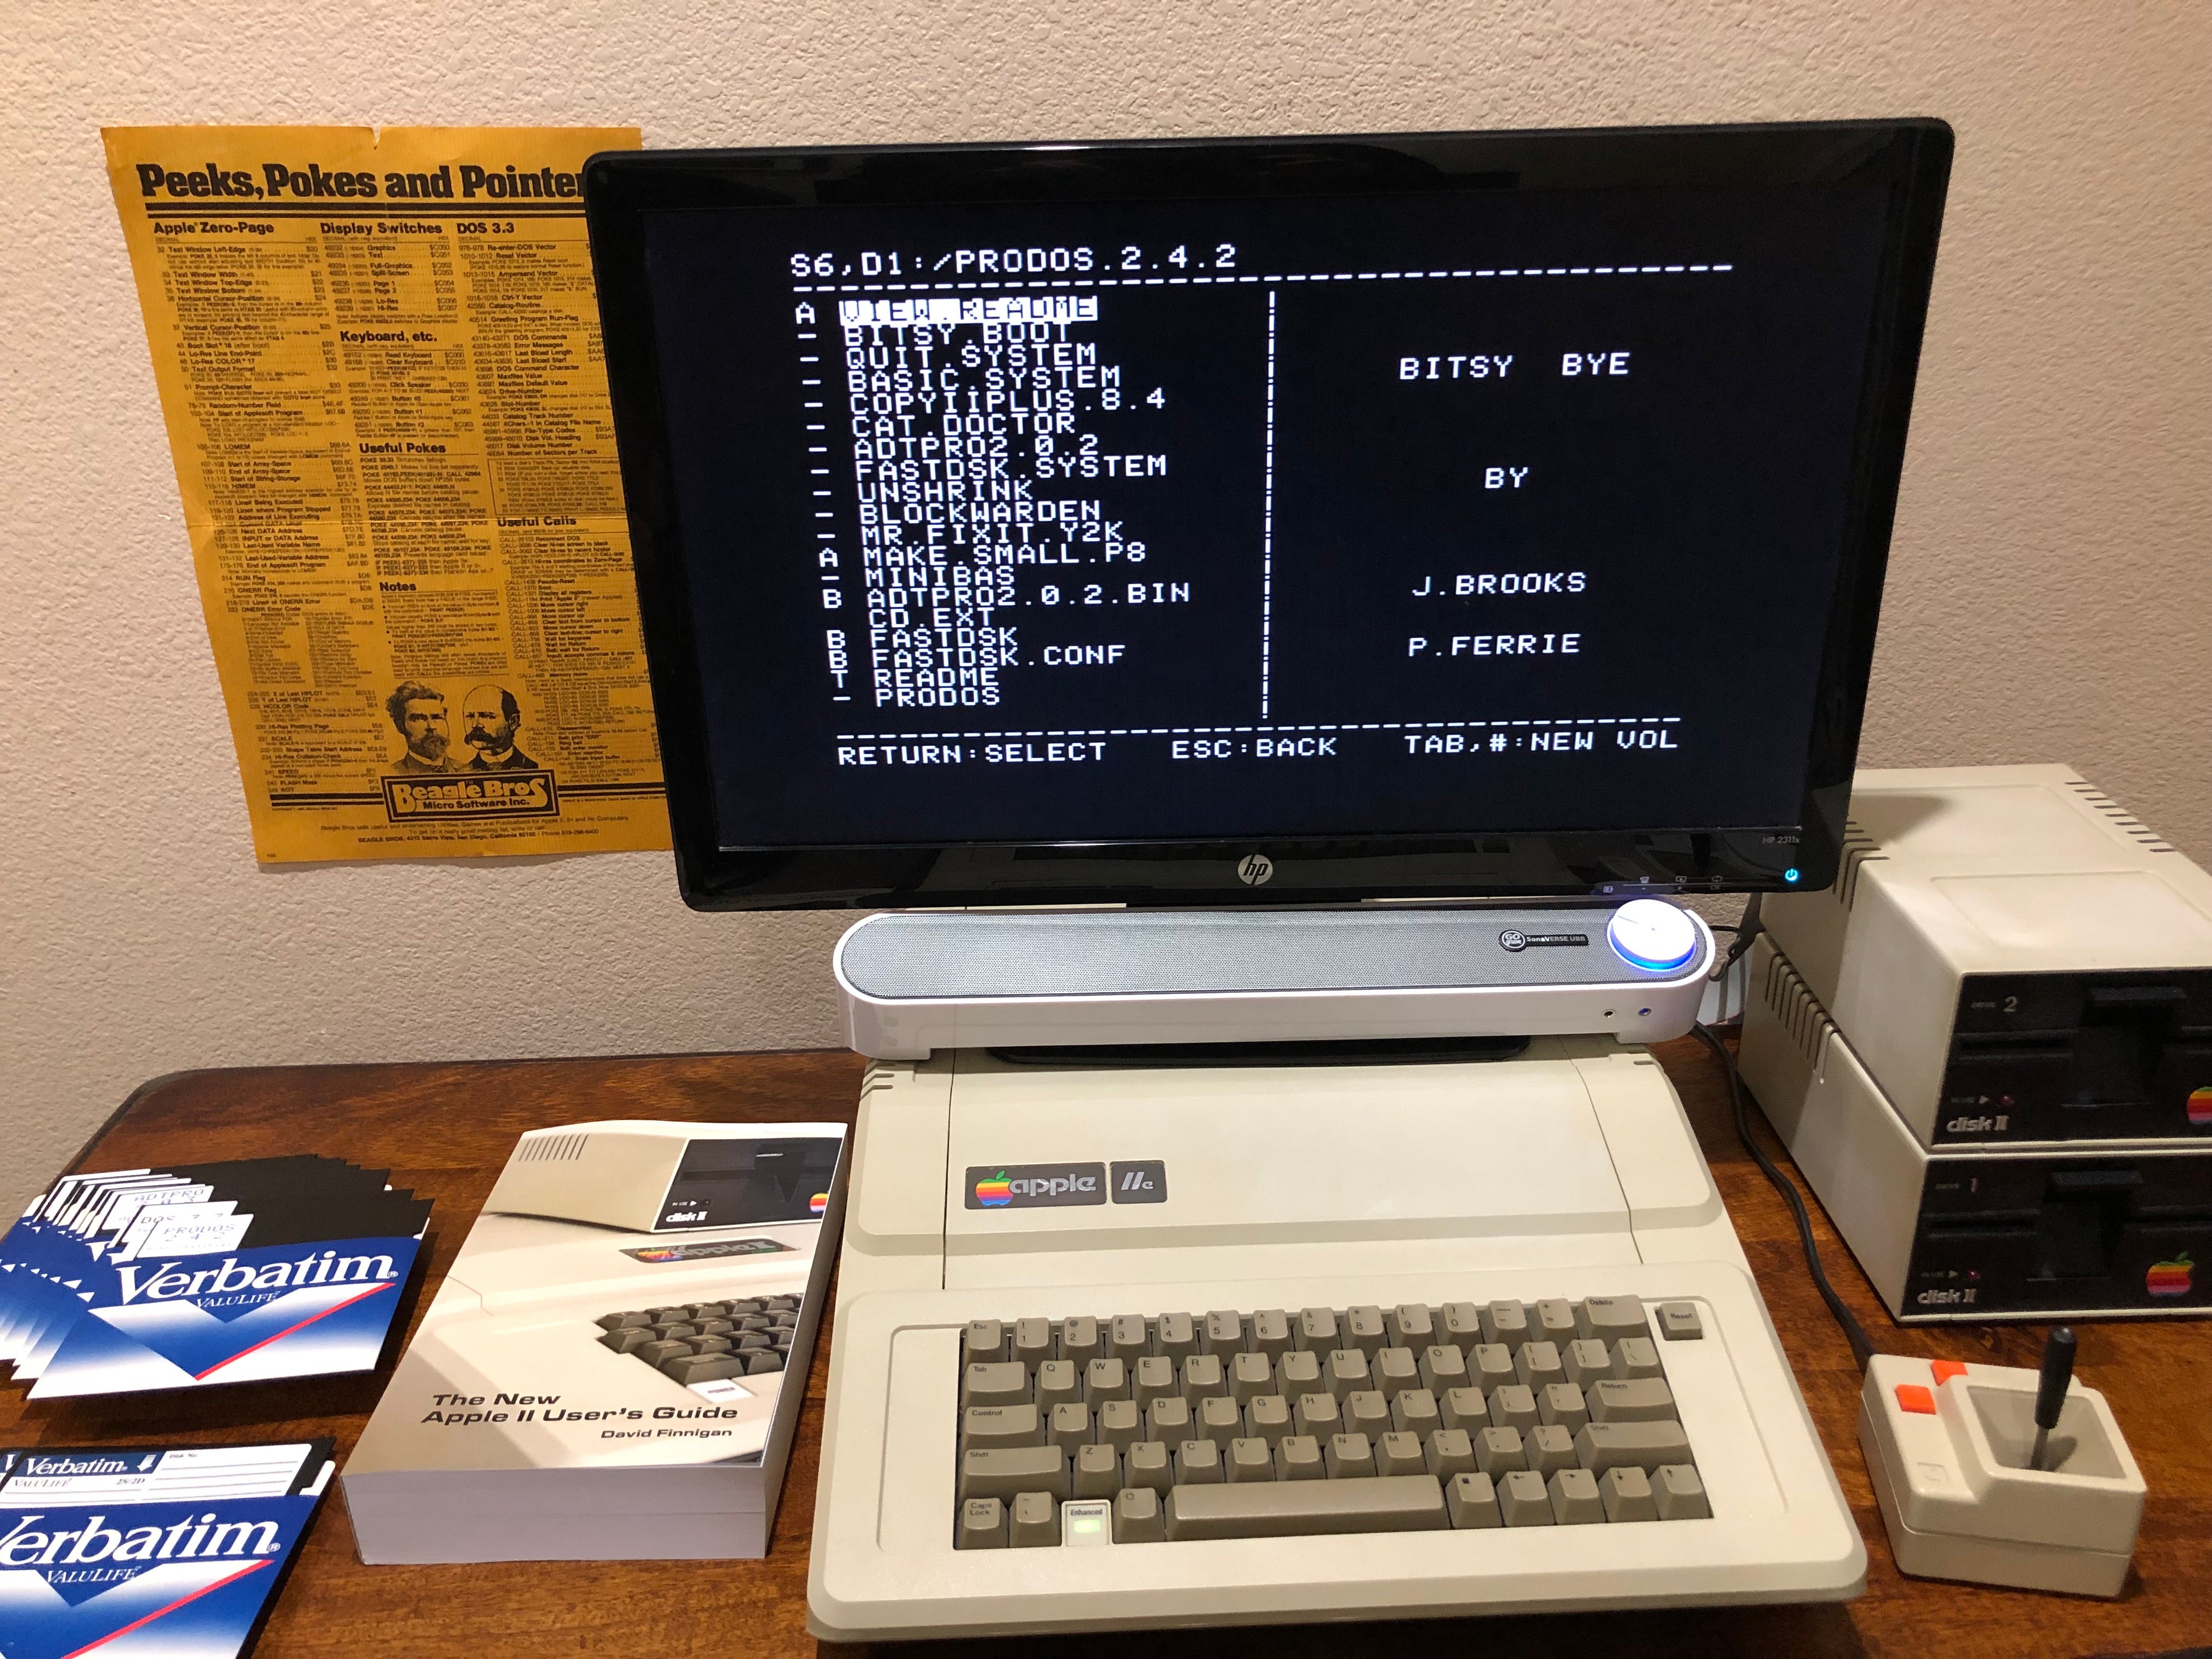 The Modern Apple IIe